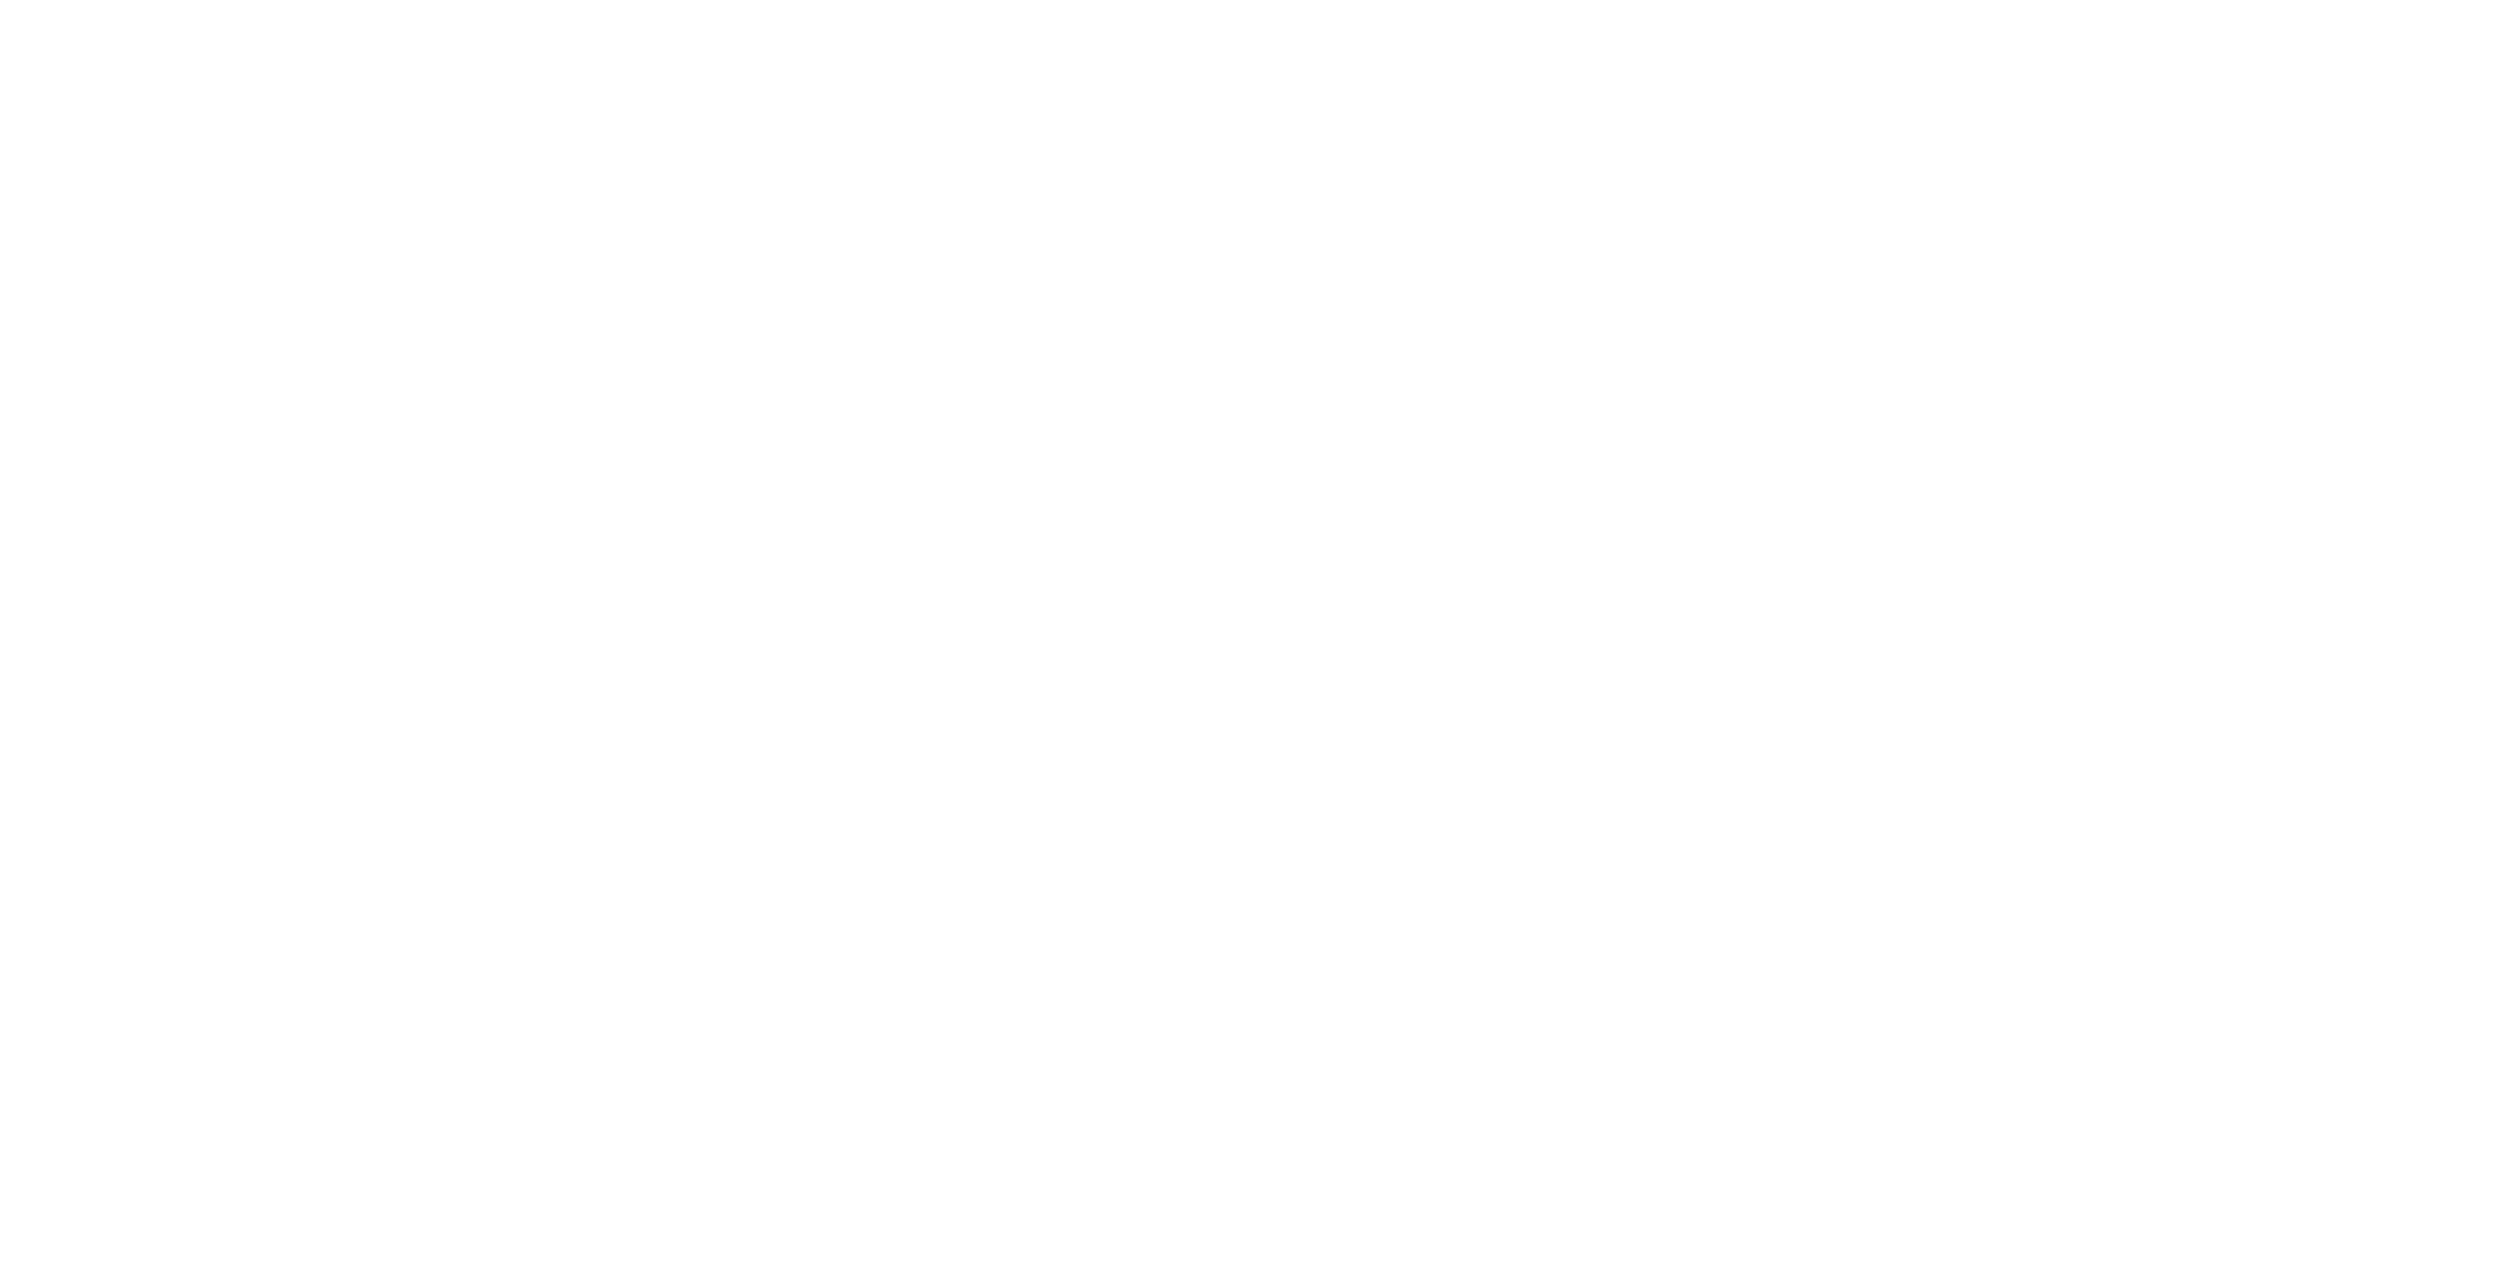 The Club 312